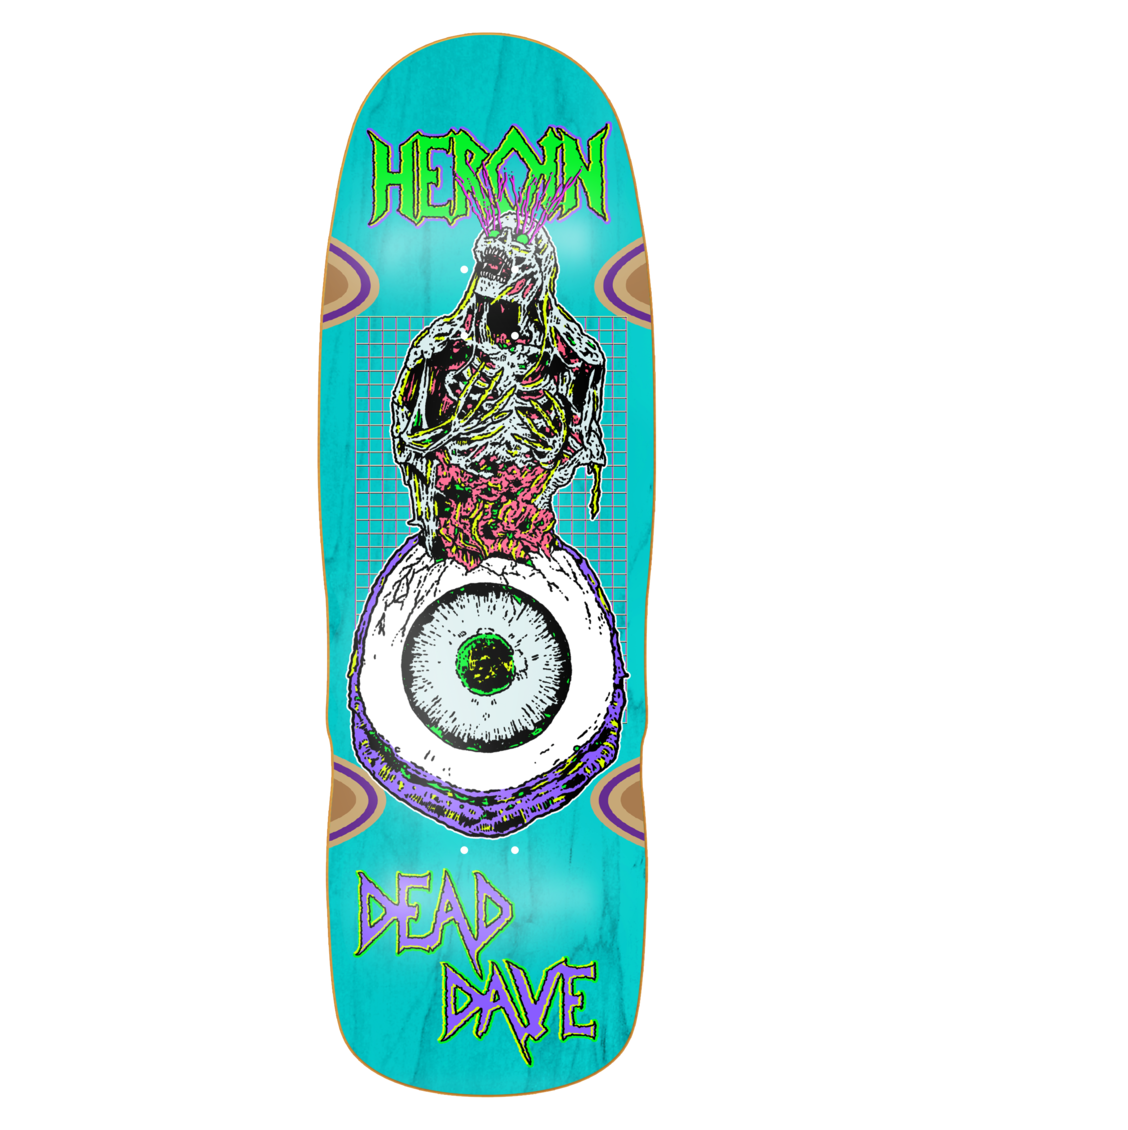 Heroin Skateboards "Dead Dave- Die Tonight" 10.1" Deck